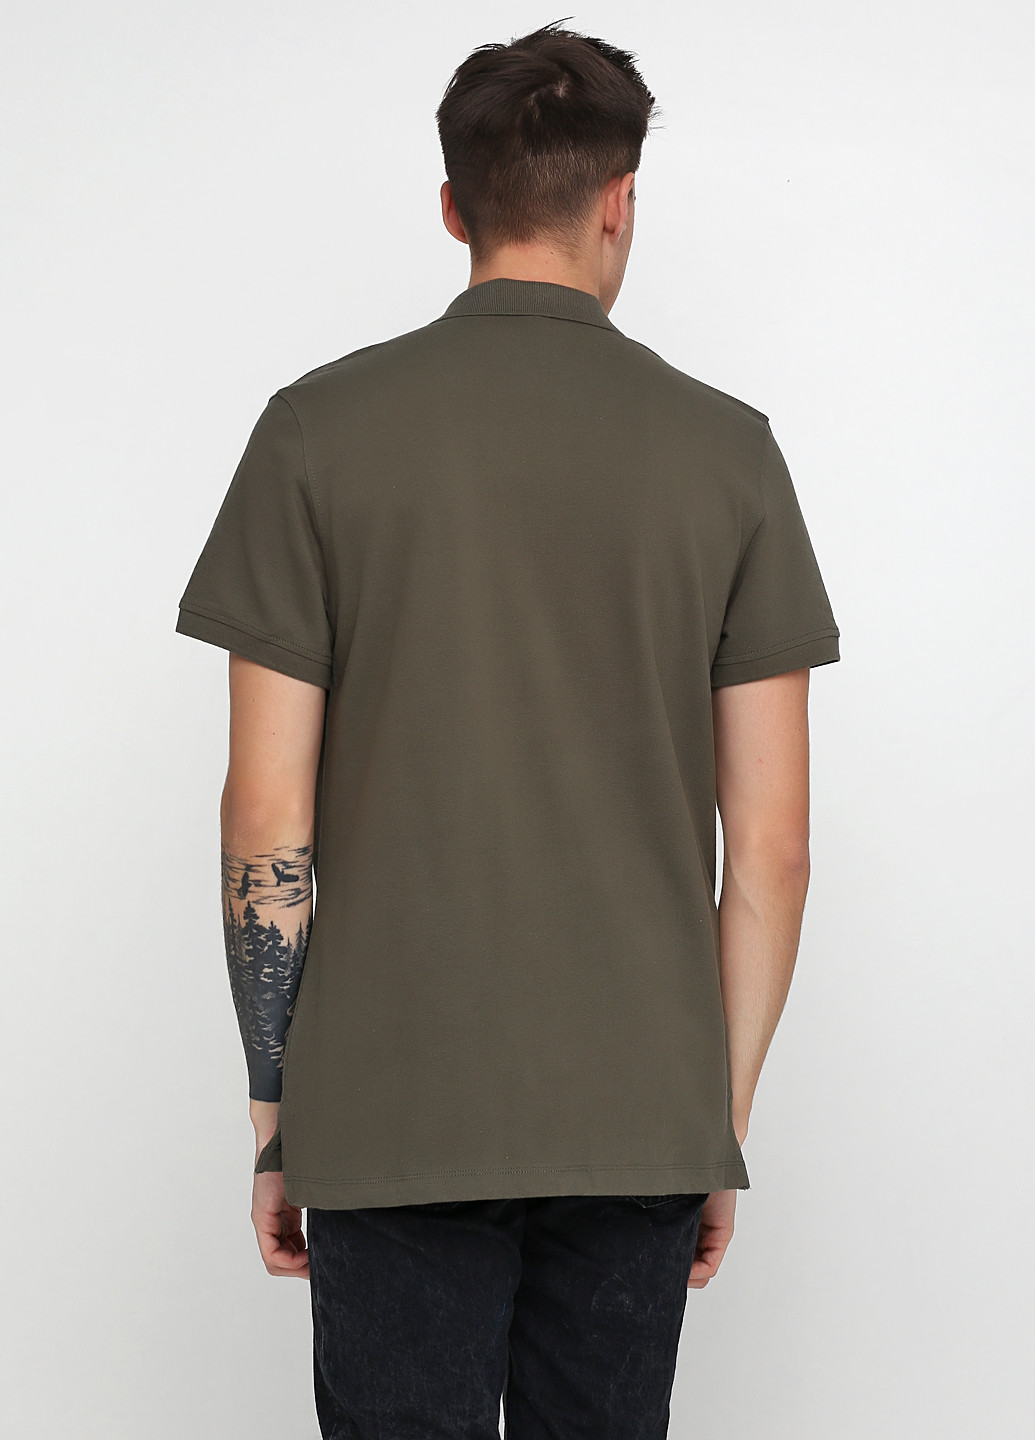 Оливковая (хаки) футболка-поло для мужчин Blend однотонная